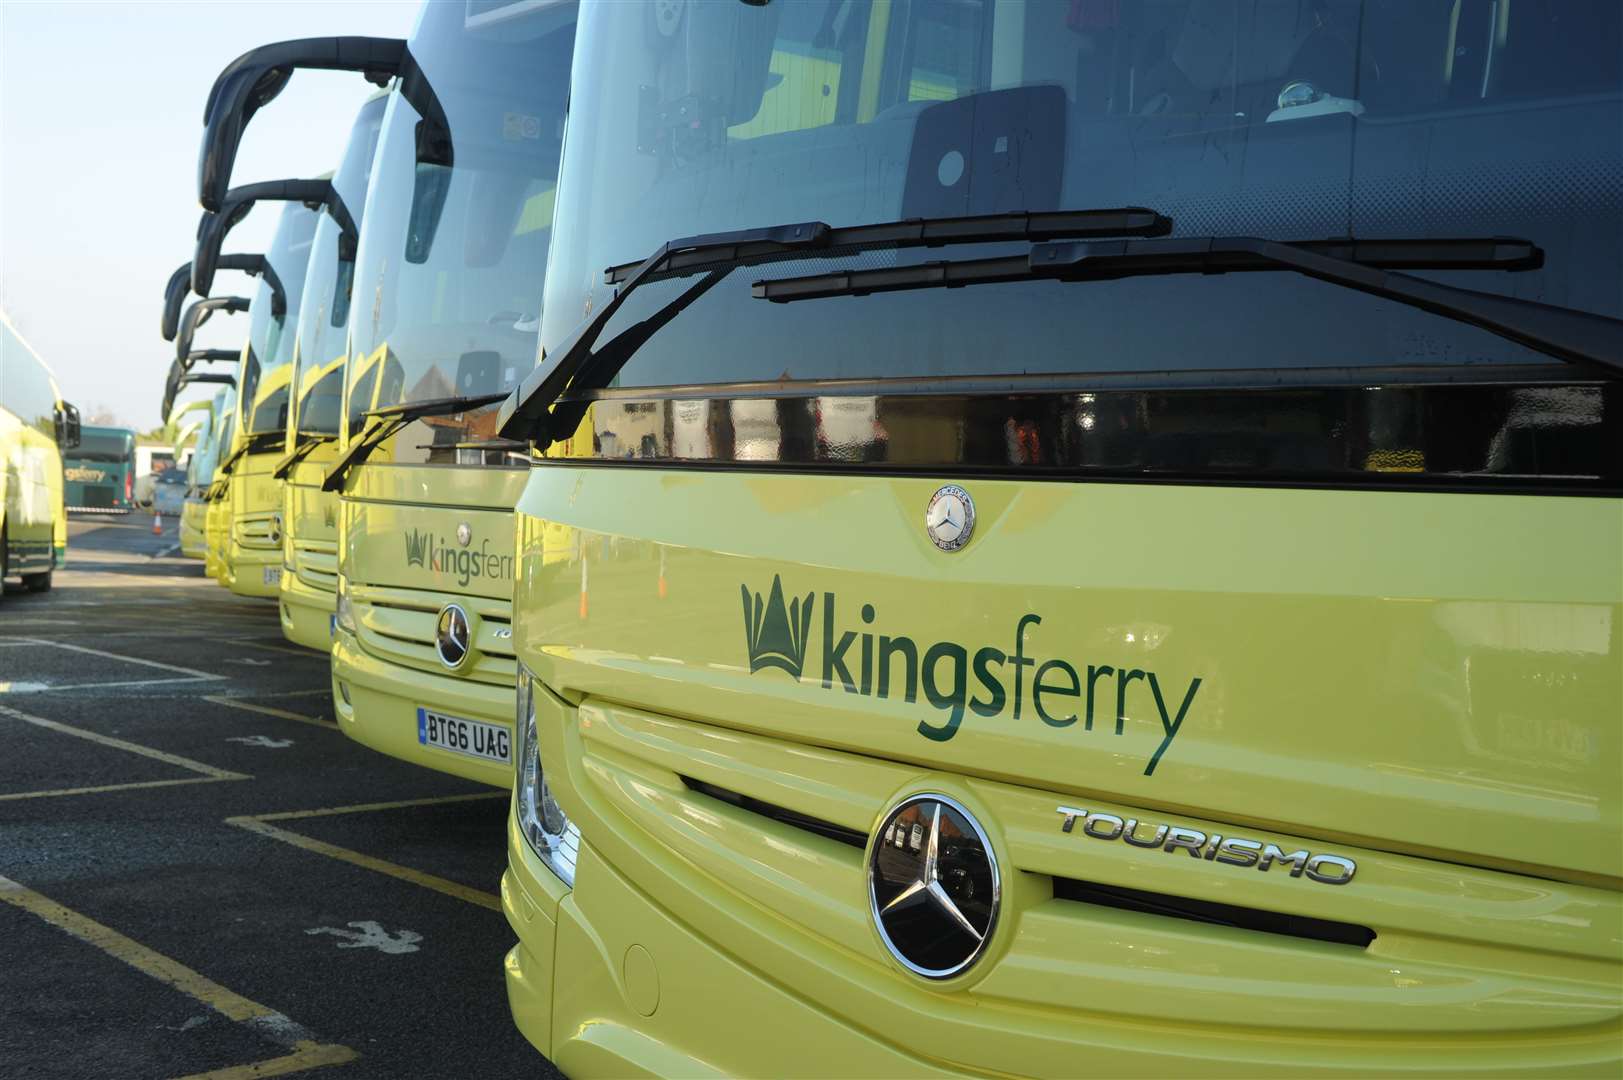 King Ferry Coach Co, Eastcourt Lane, Gillingham.